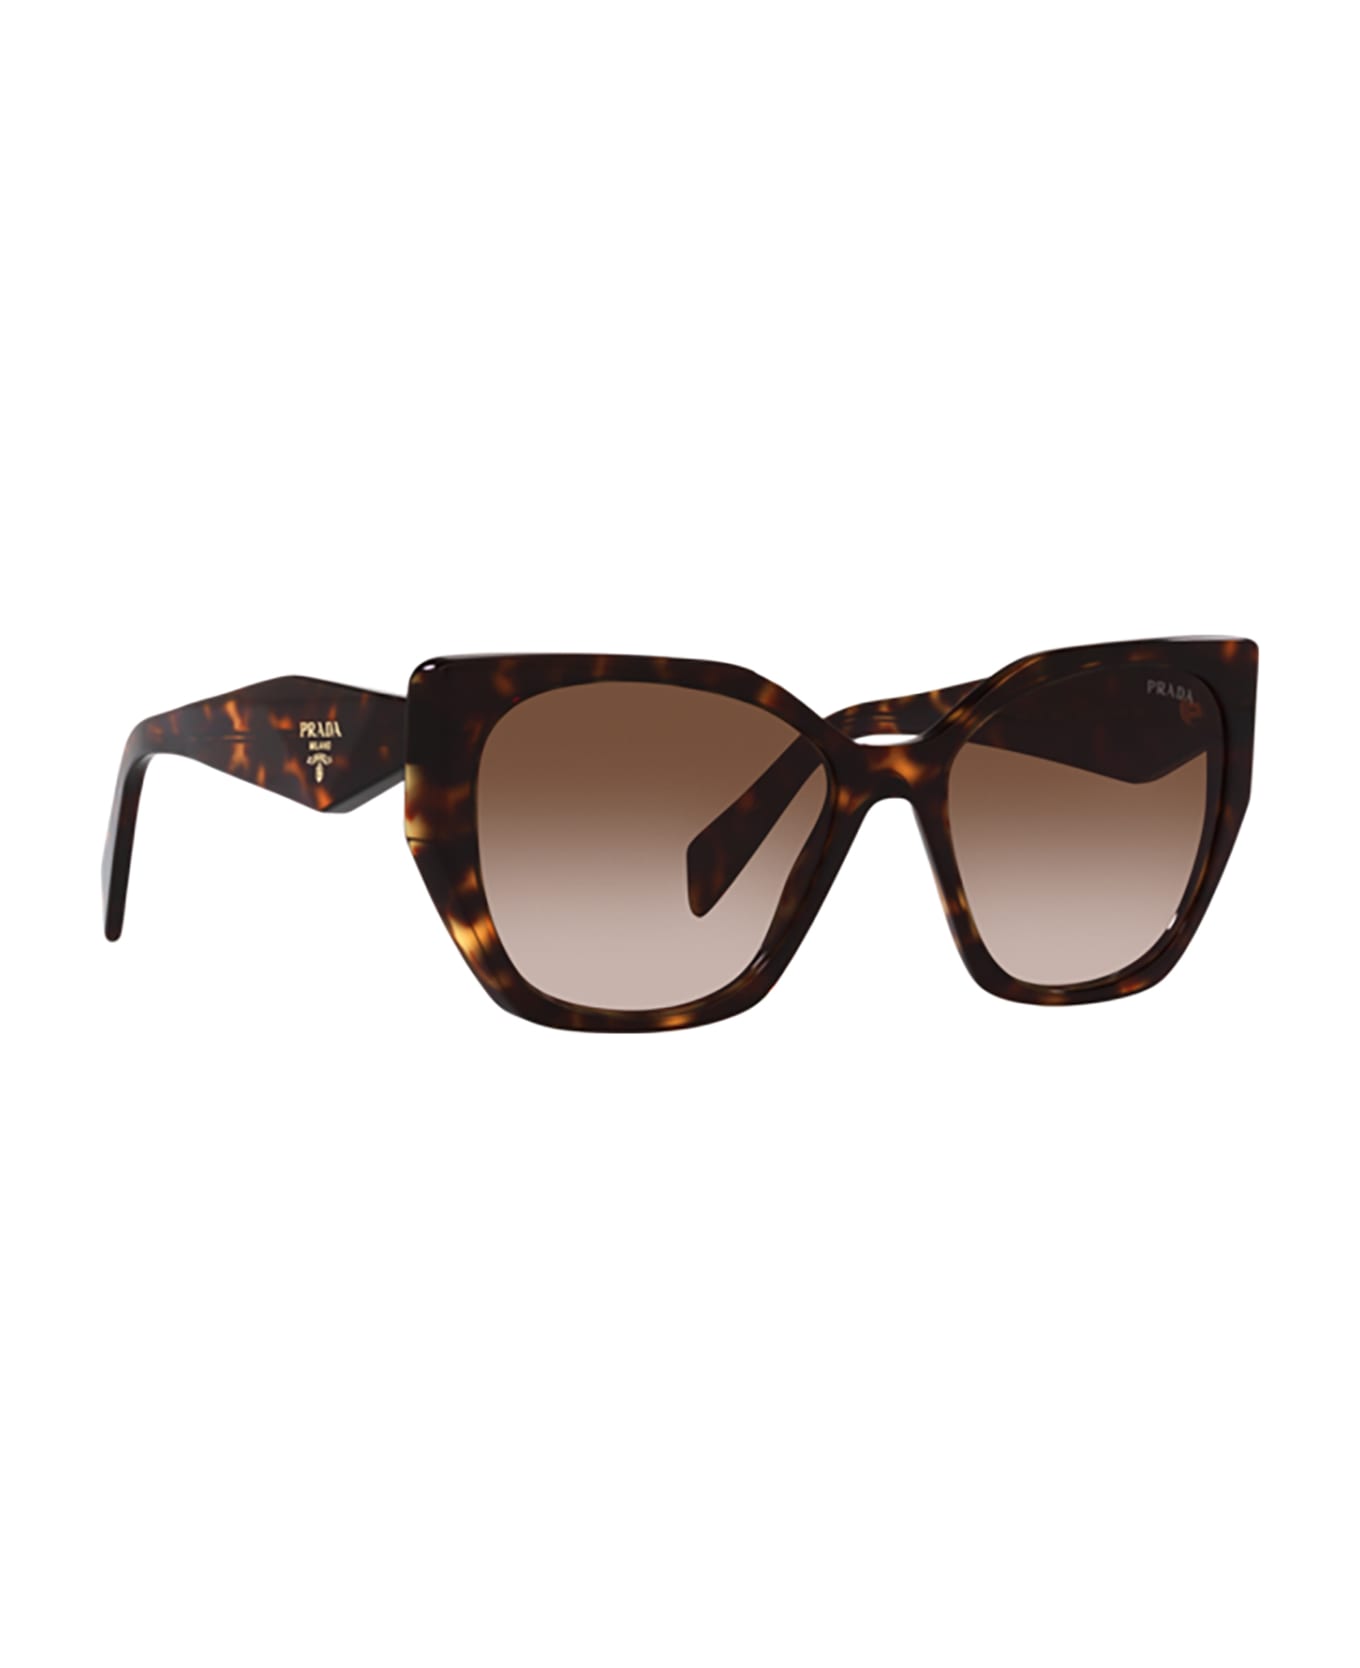 Prada Eyewear Pr 19zs Tortoise Sunglasses - Tortoise